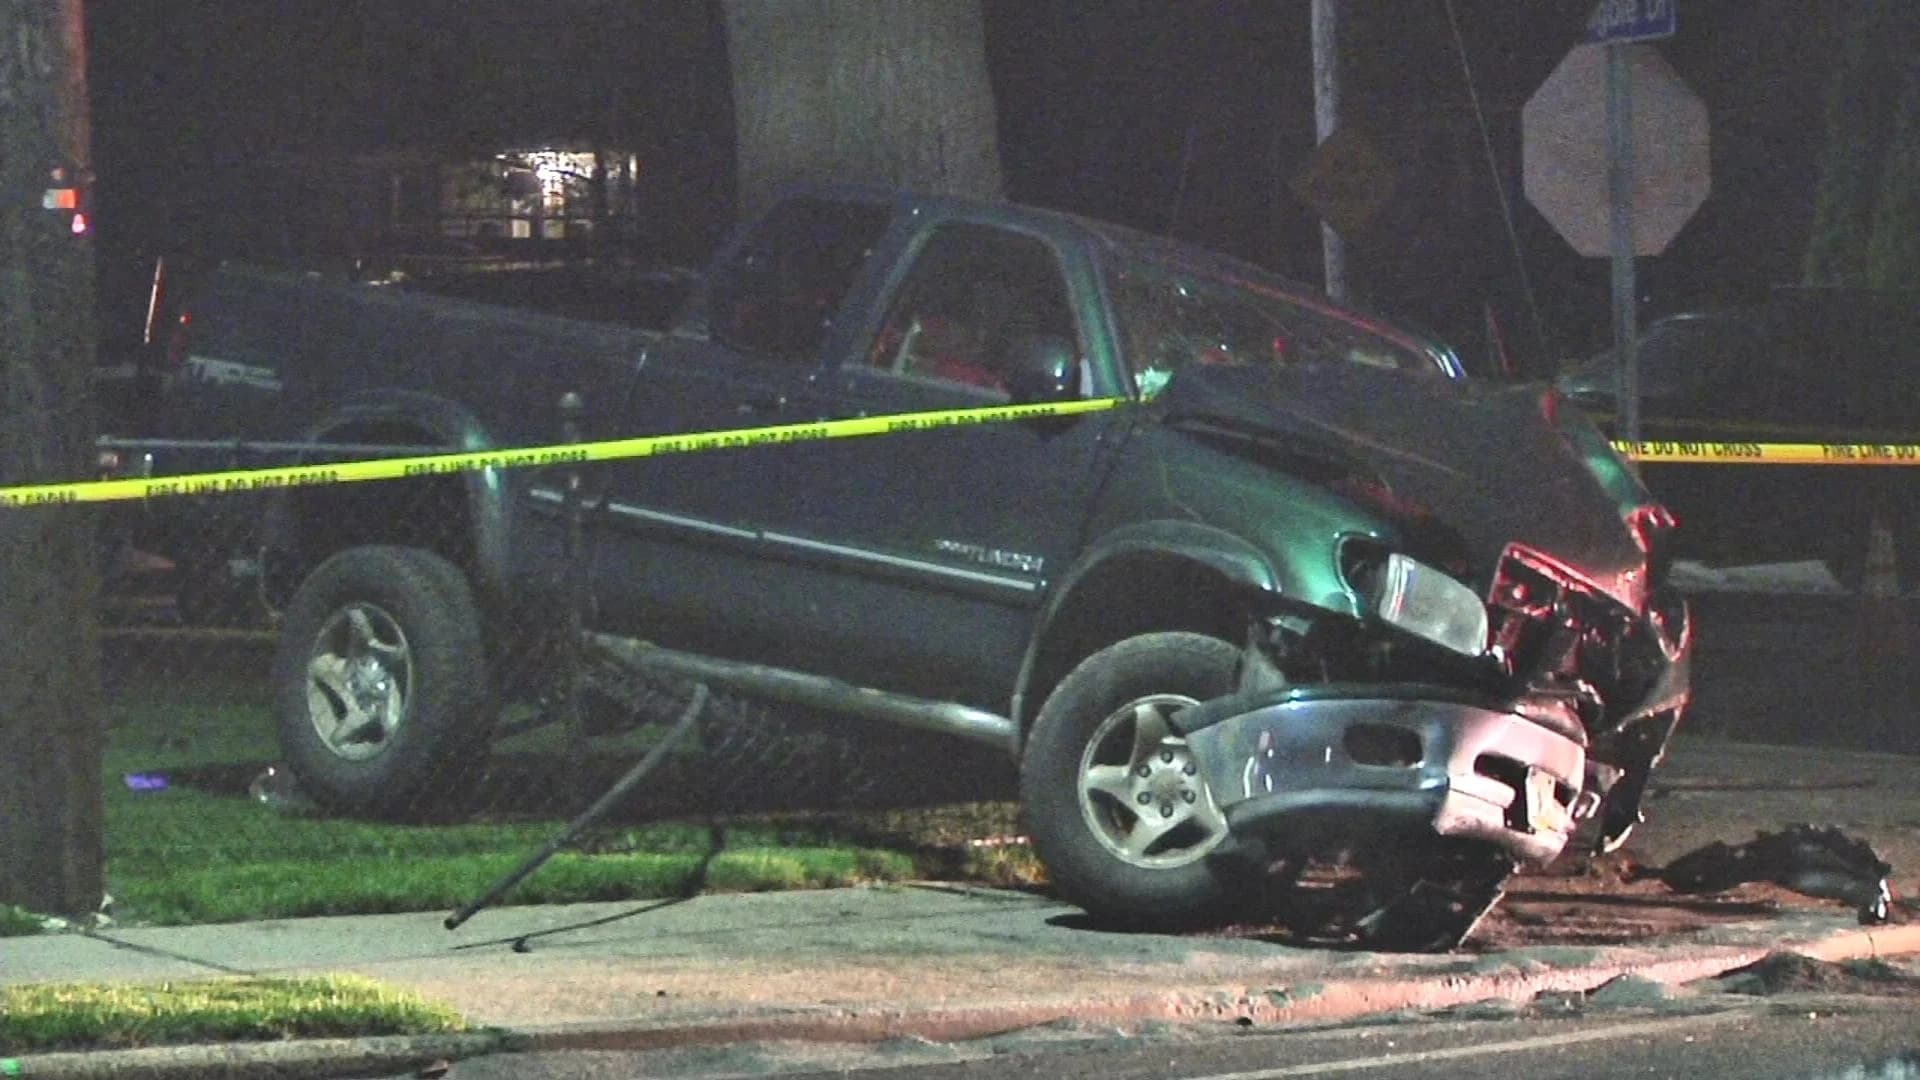 Pickup truck slams into tree in overnight West Islip crash